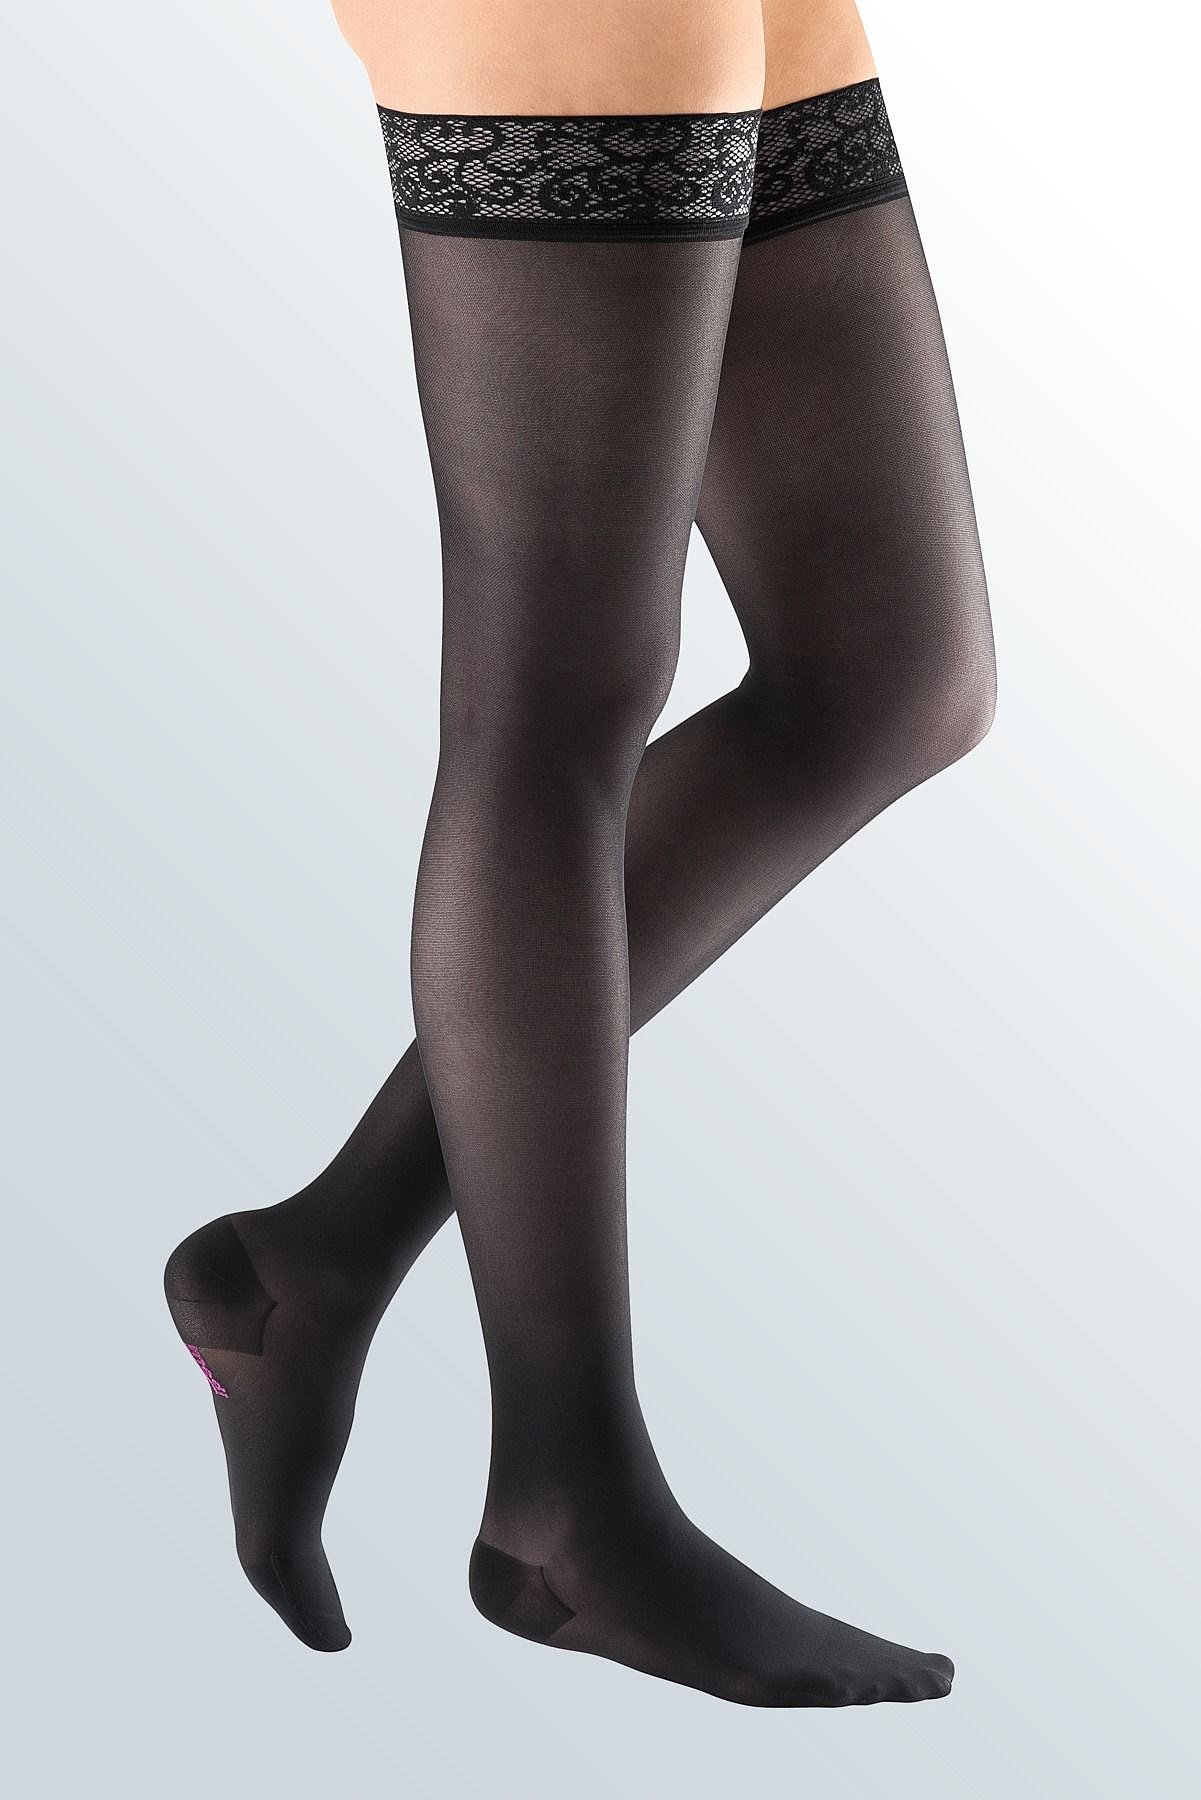 Mediven Sheer & Soft Compression Stockings